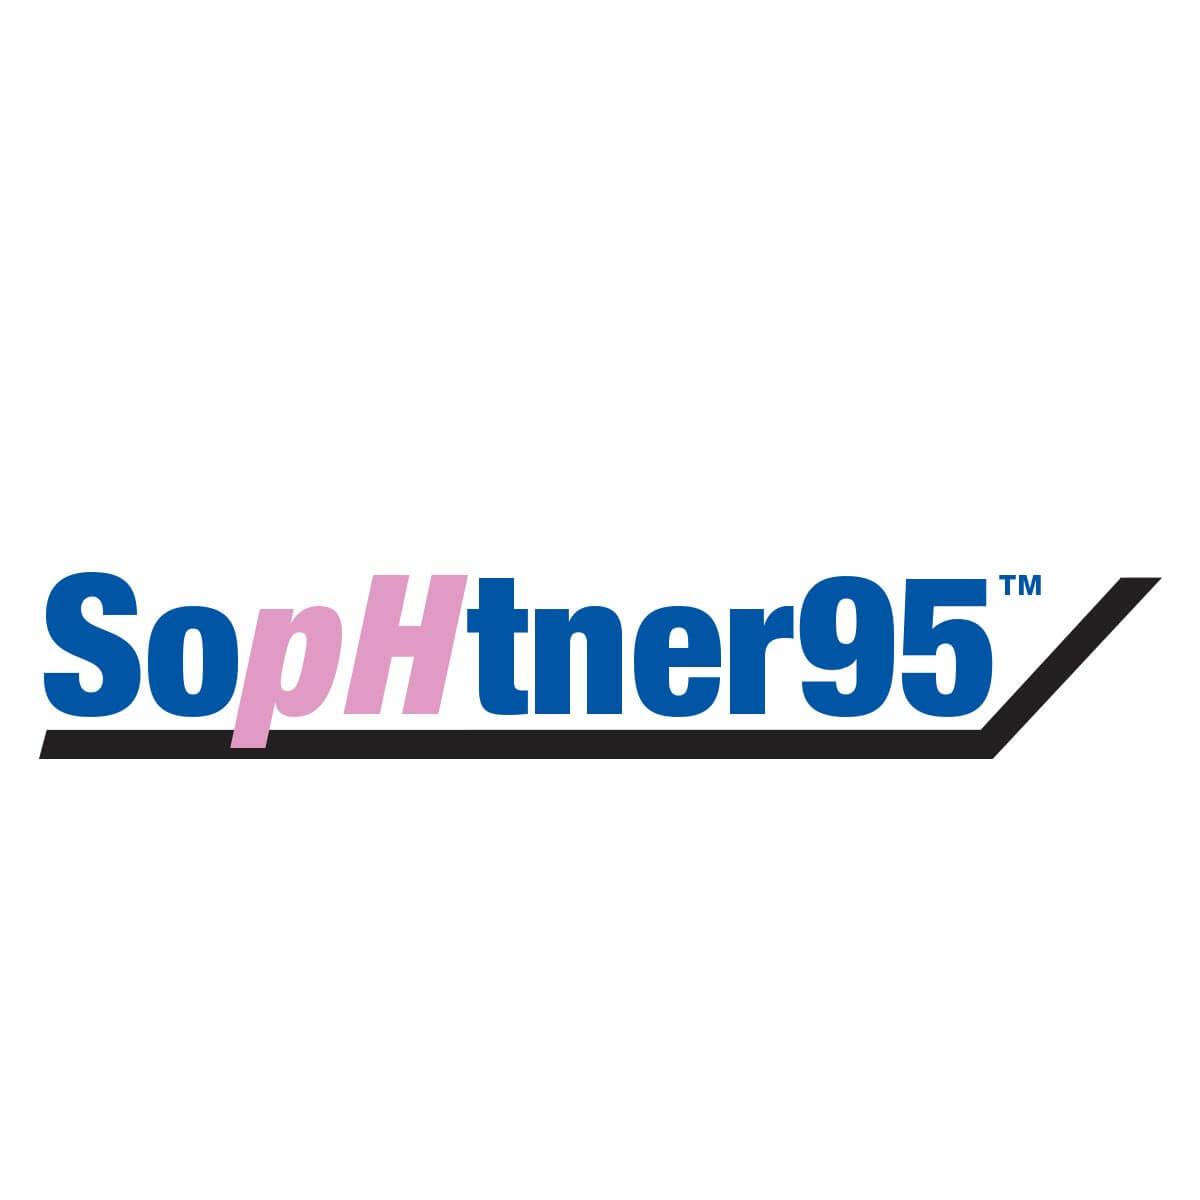 SopHtner95 - 10 L